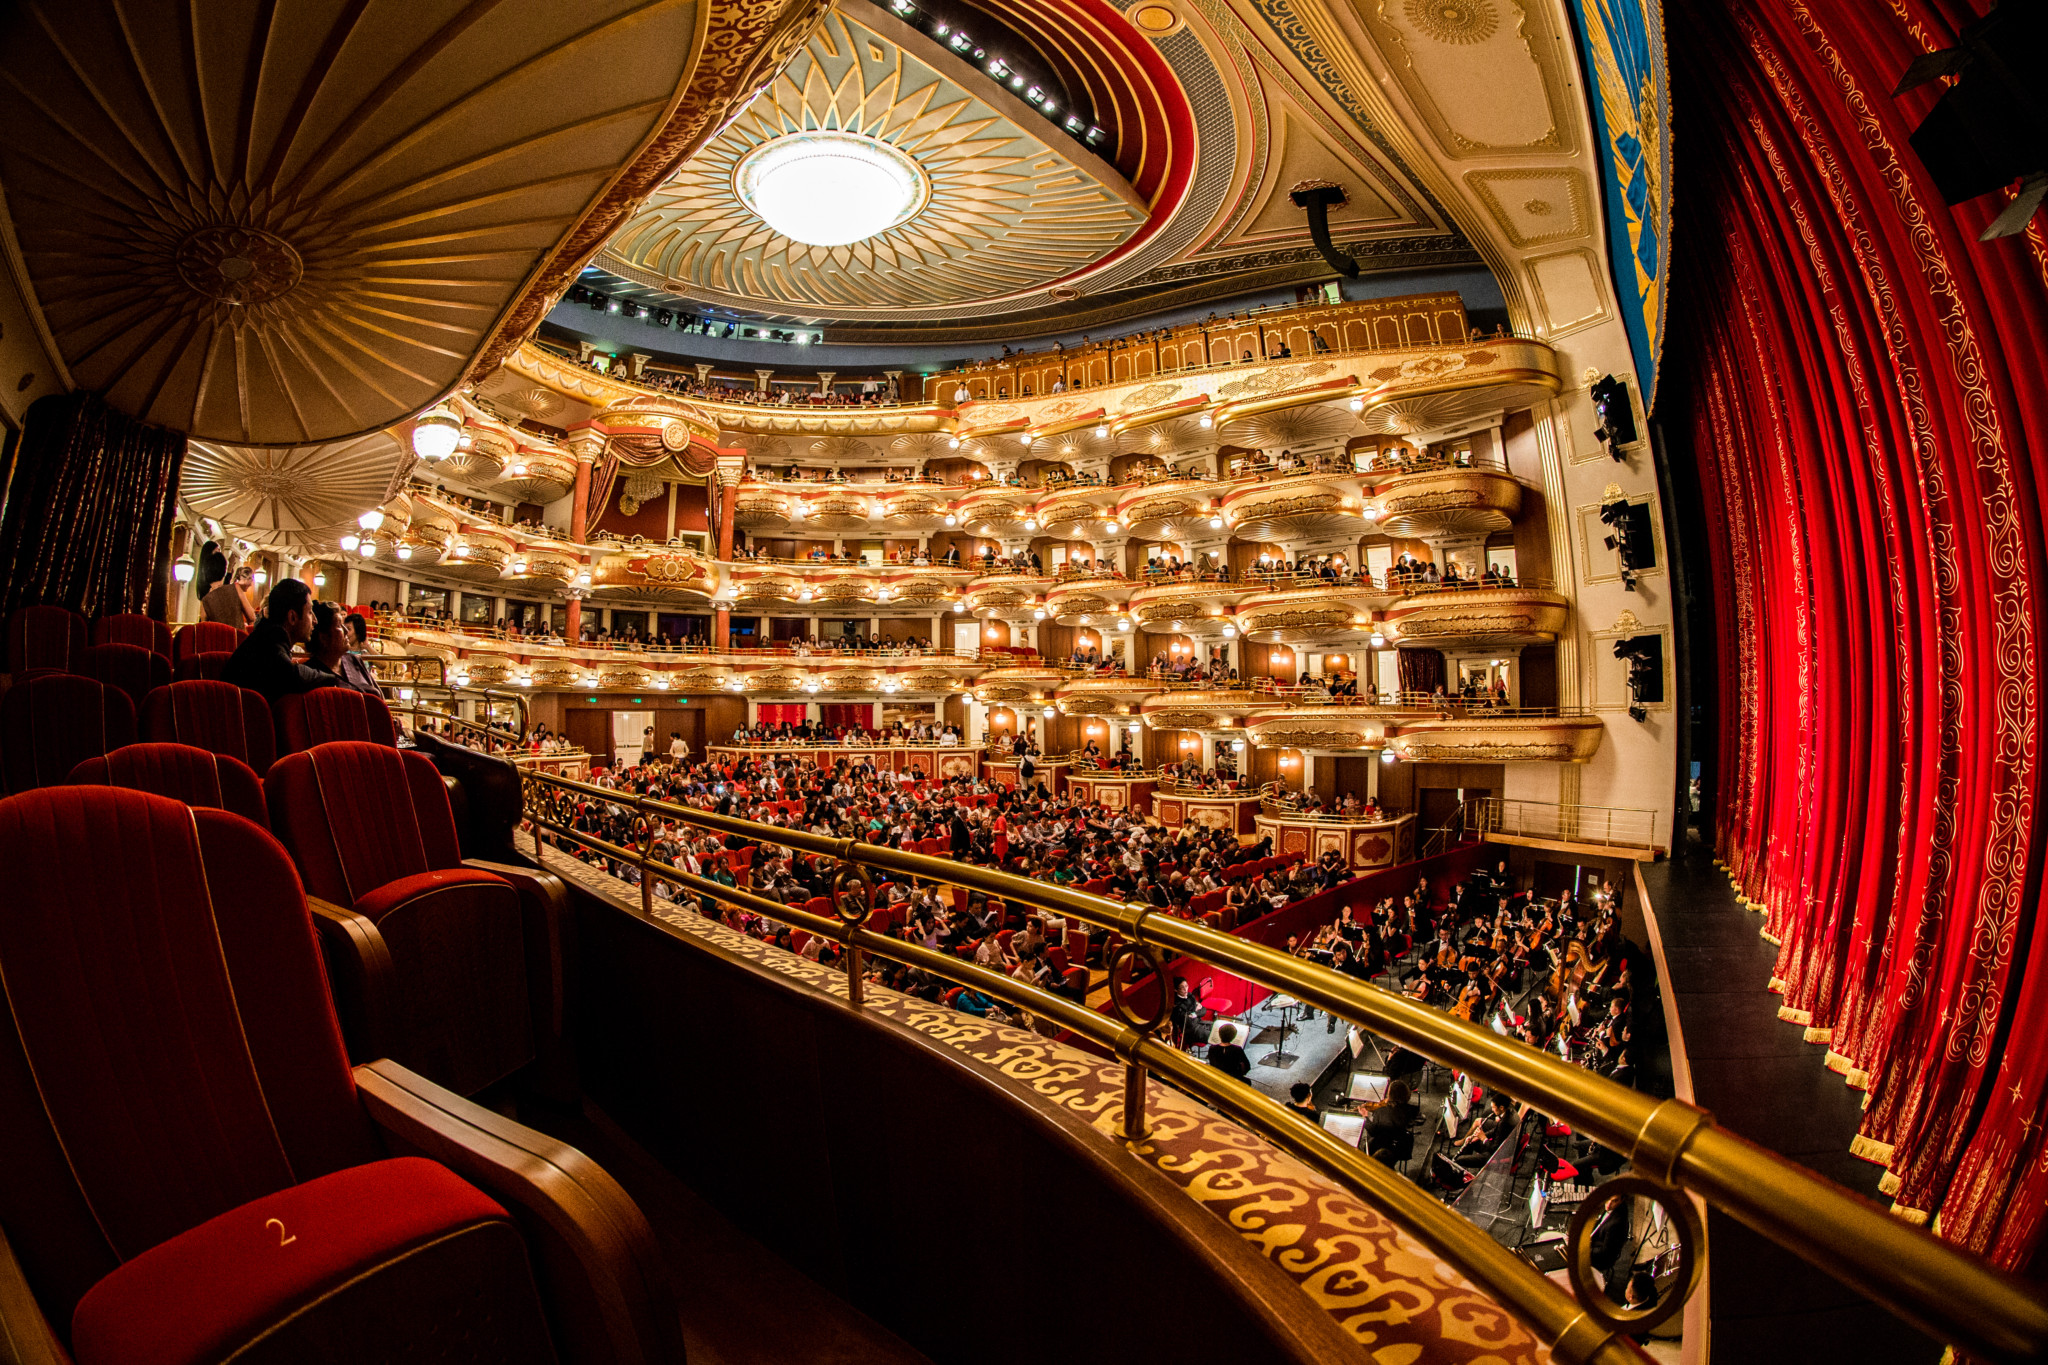 Астана опера астана фото